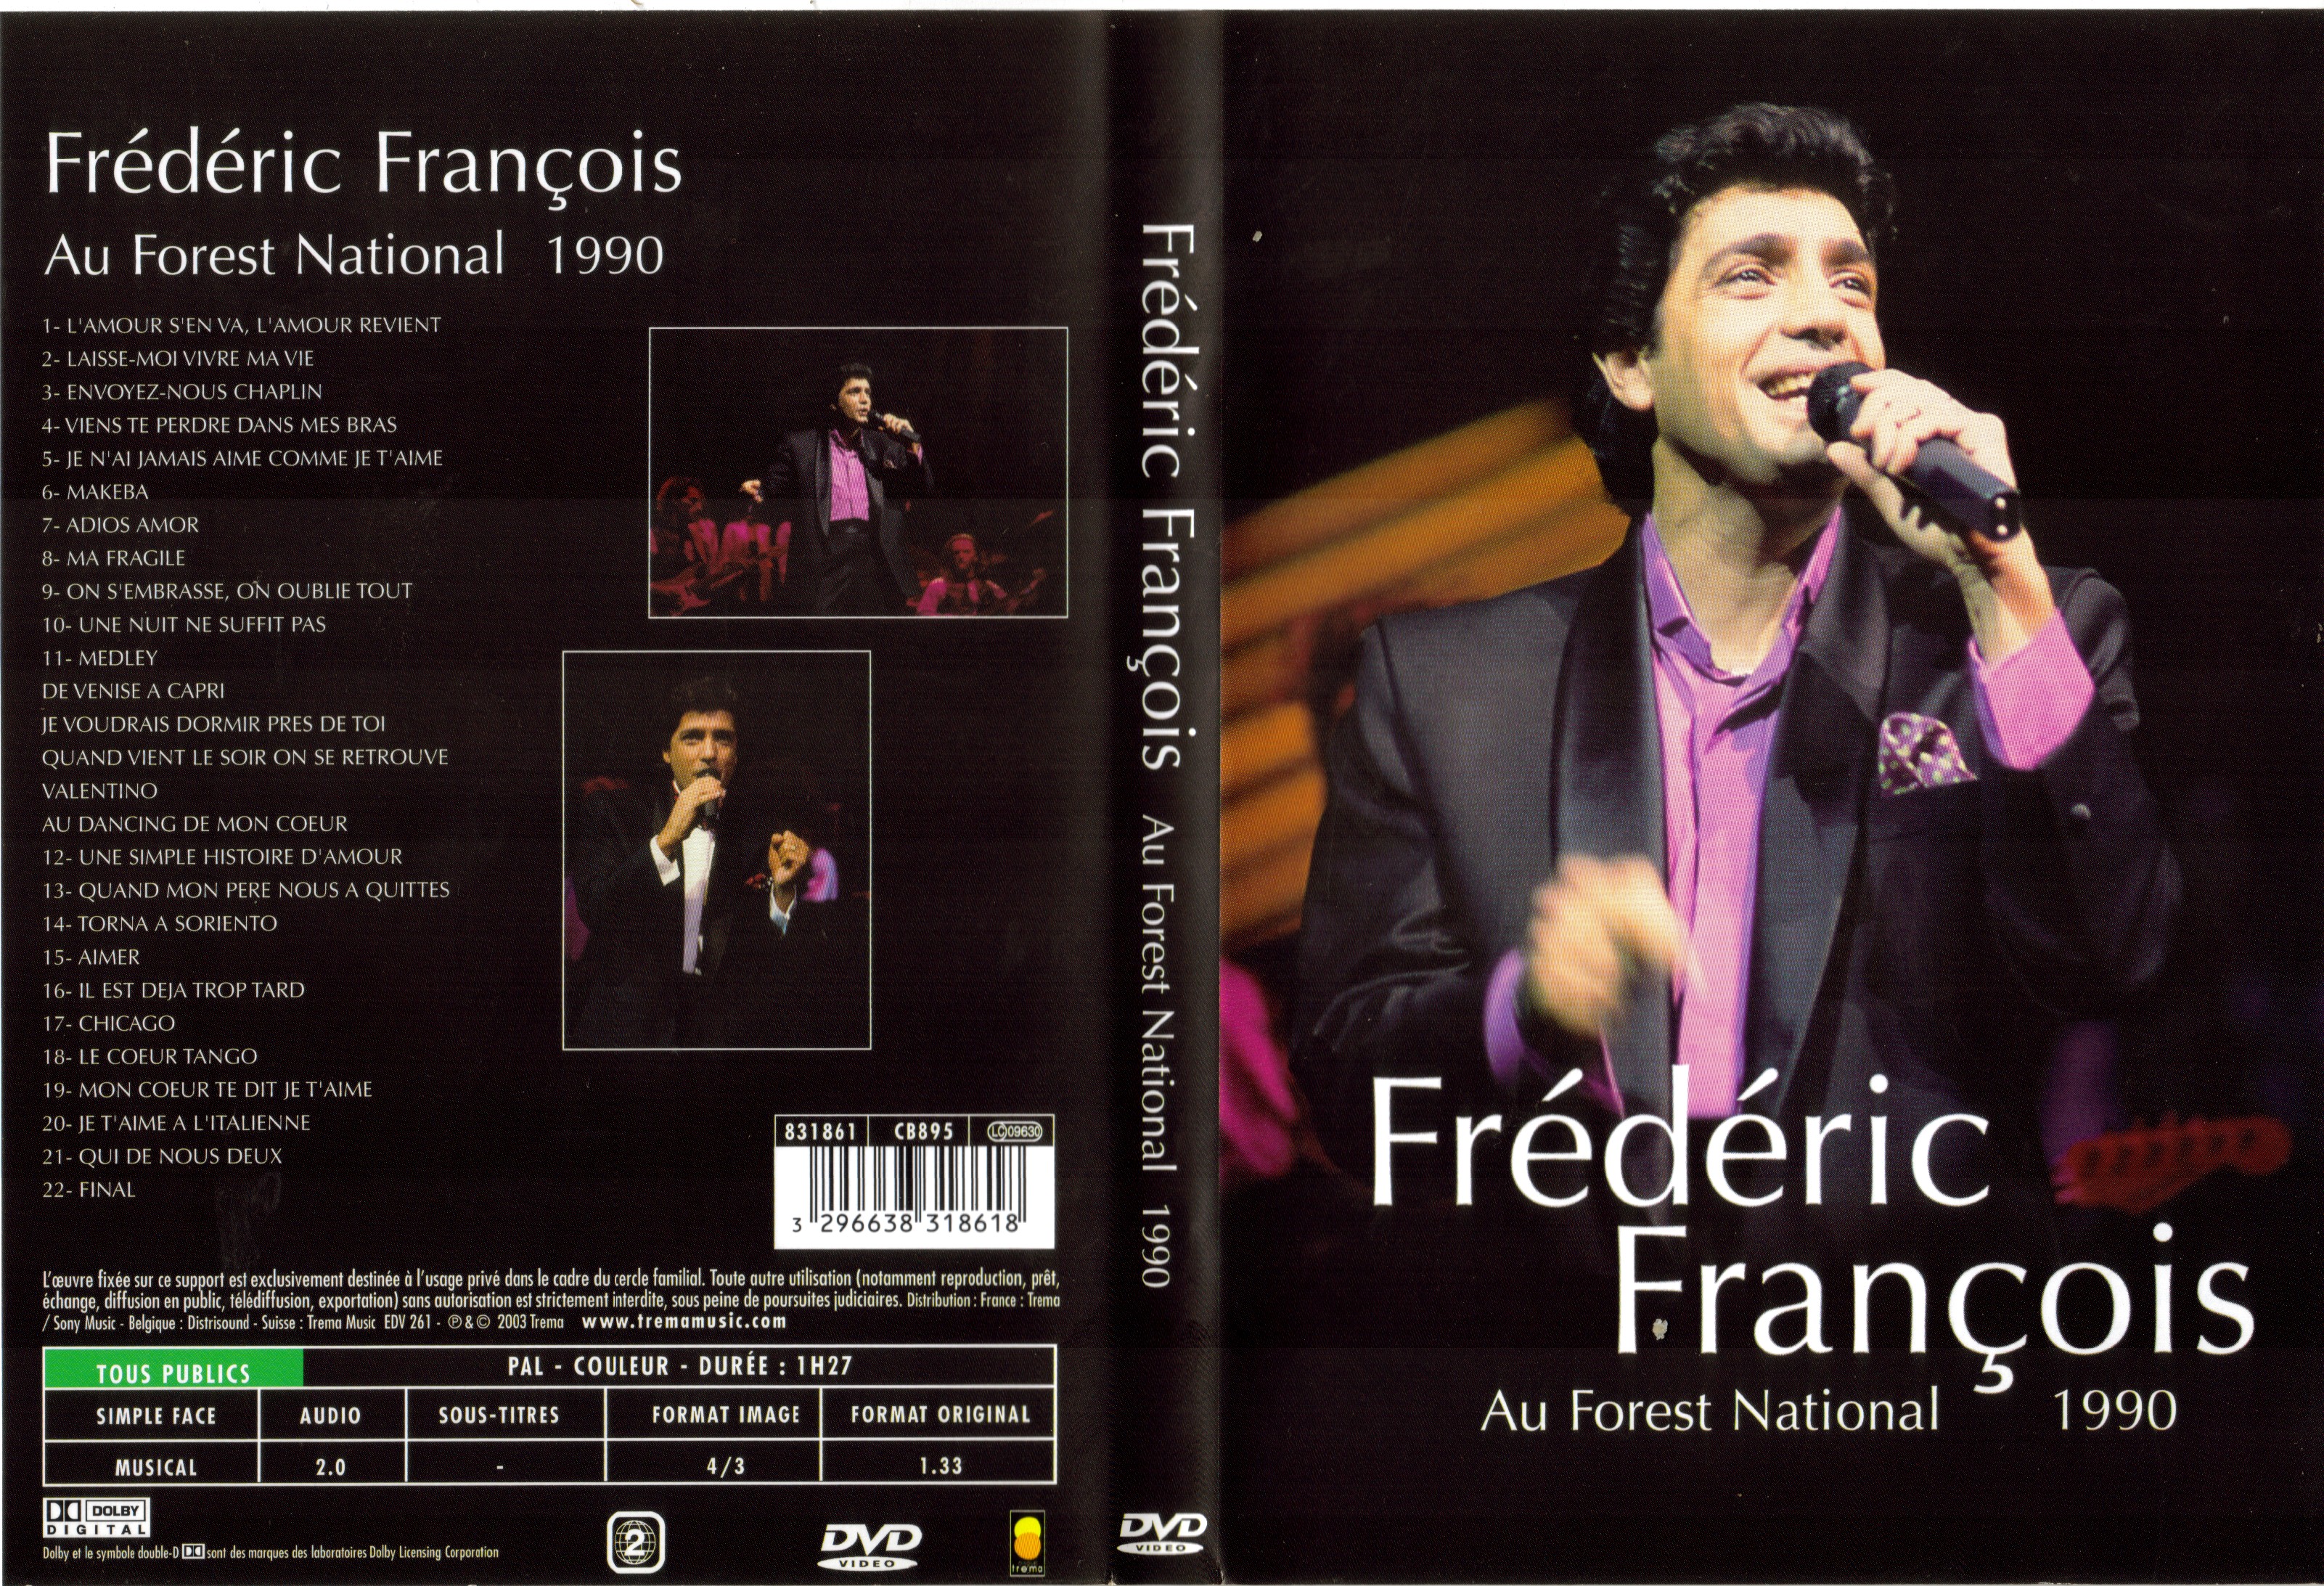 Jaquette DVD Frederic Francois au Forest National 1990